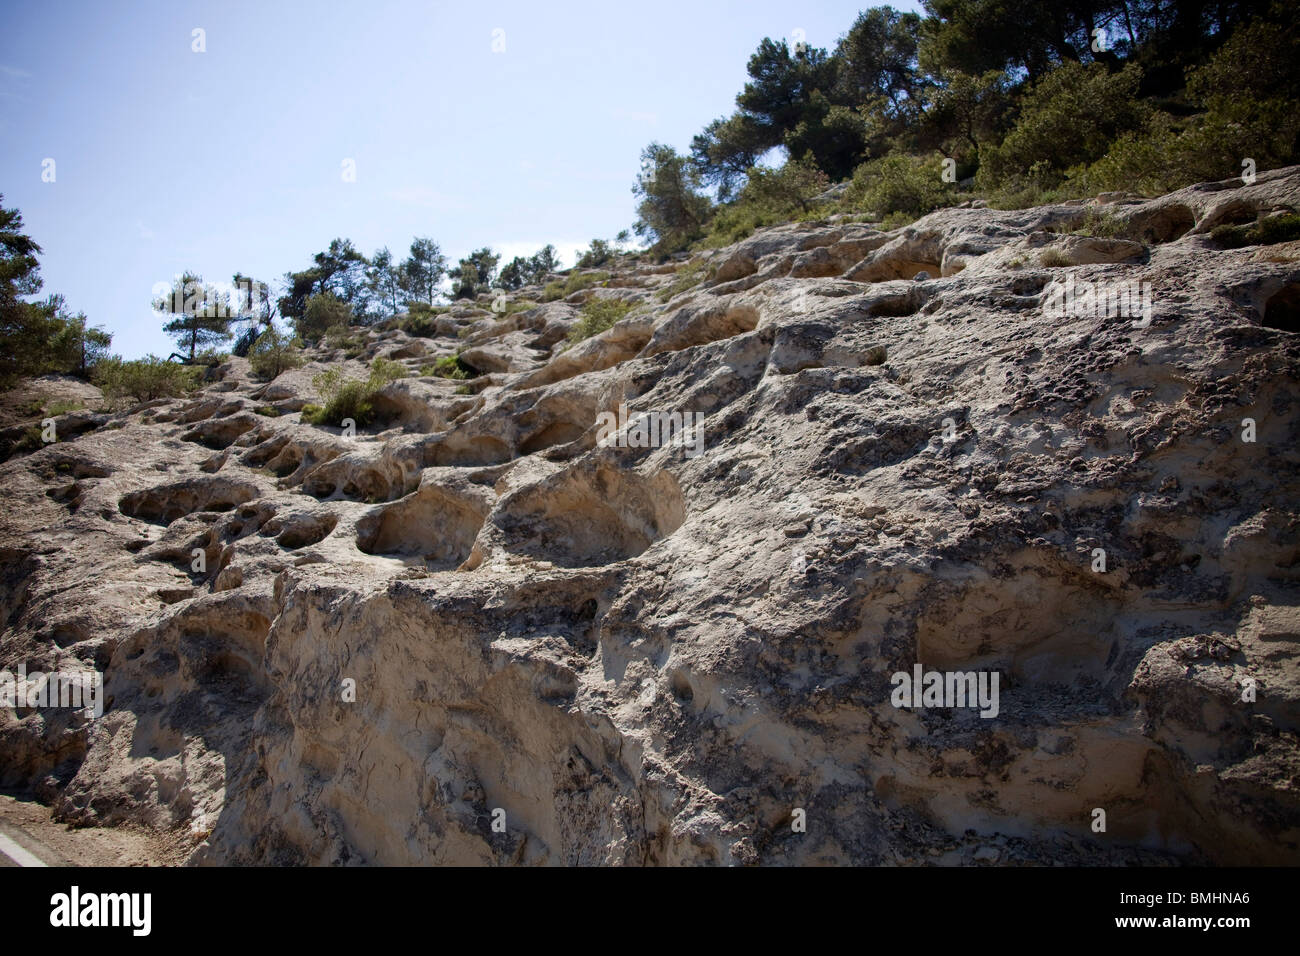 Honeycomb rock formation, effect of erosion, near Alcala. Marina Alta region of Alicante, Spain 106274 Spain10 Stock Photo